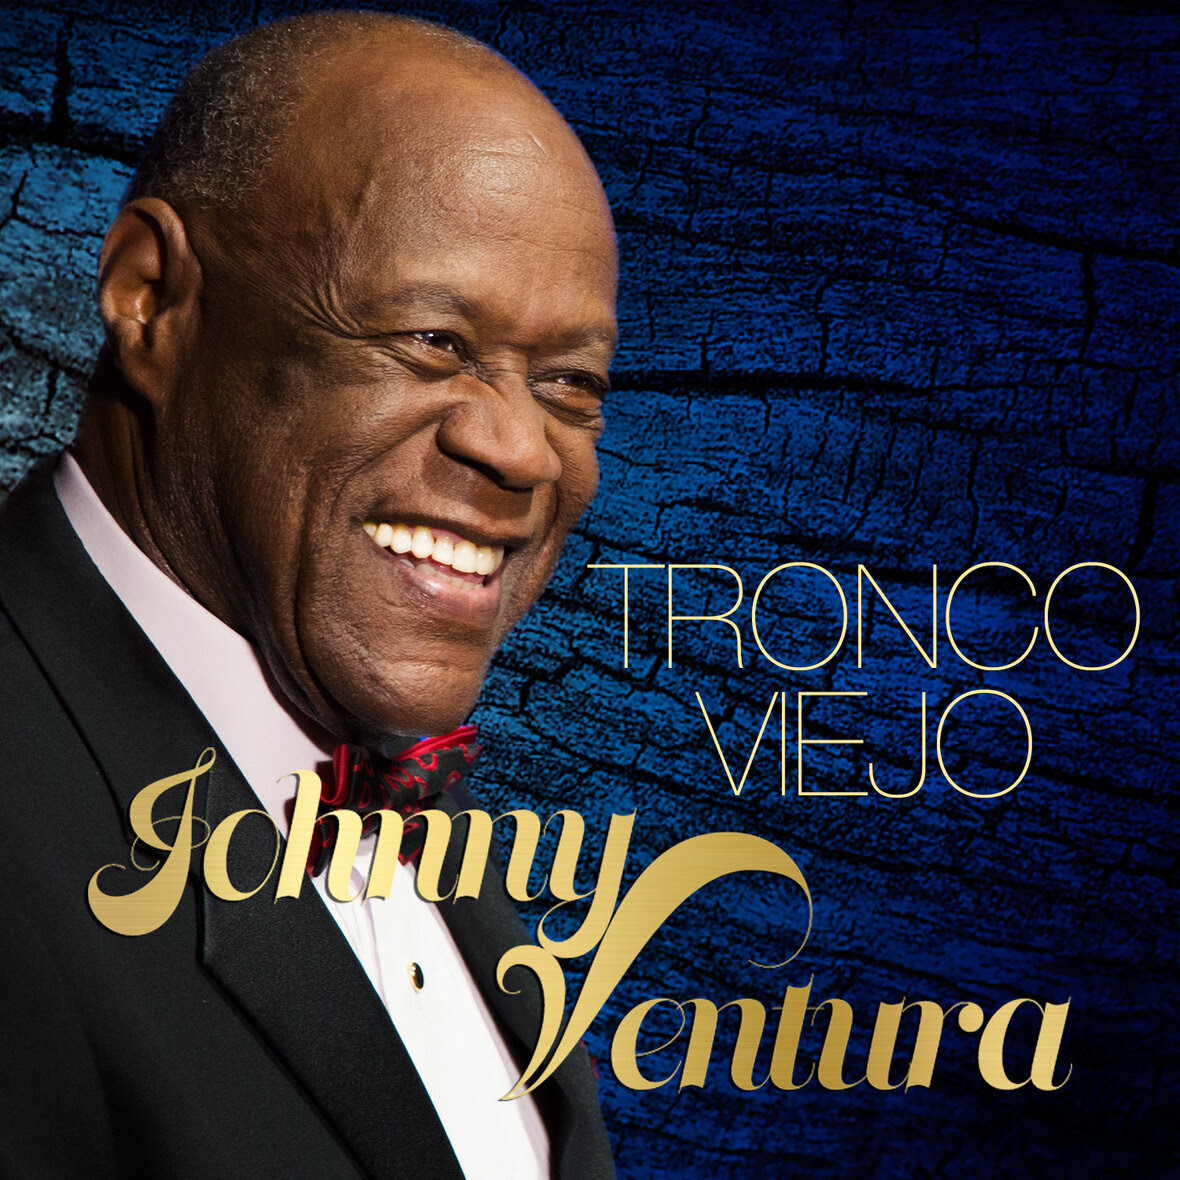 Johnny Ventura-Tronco Viejo